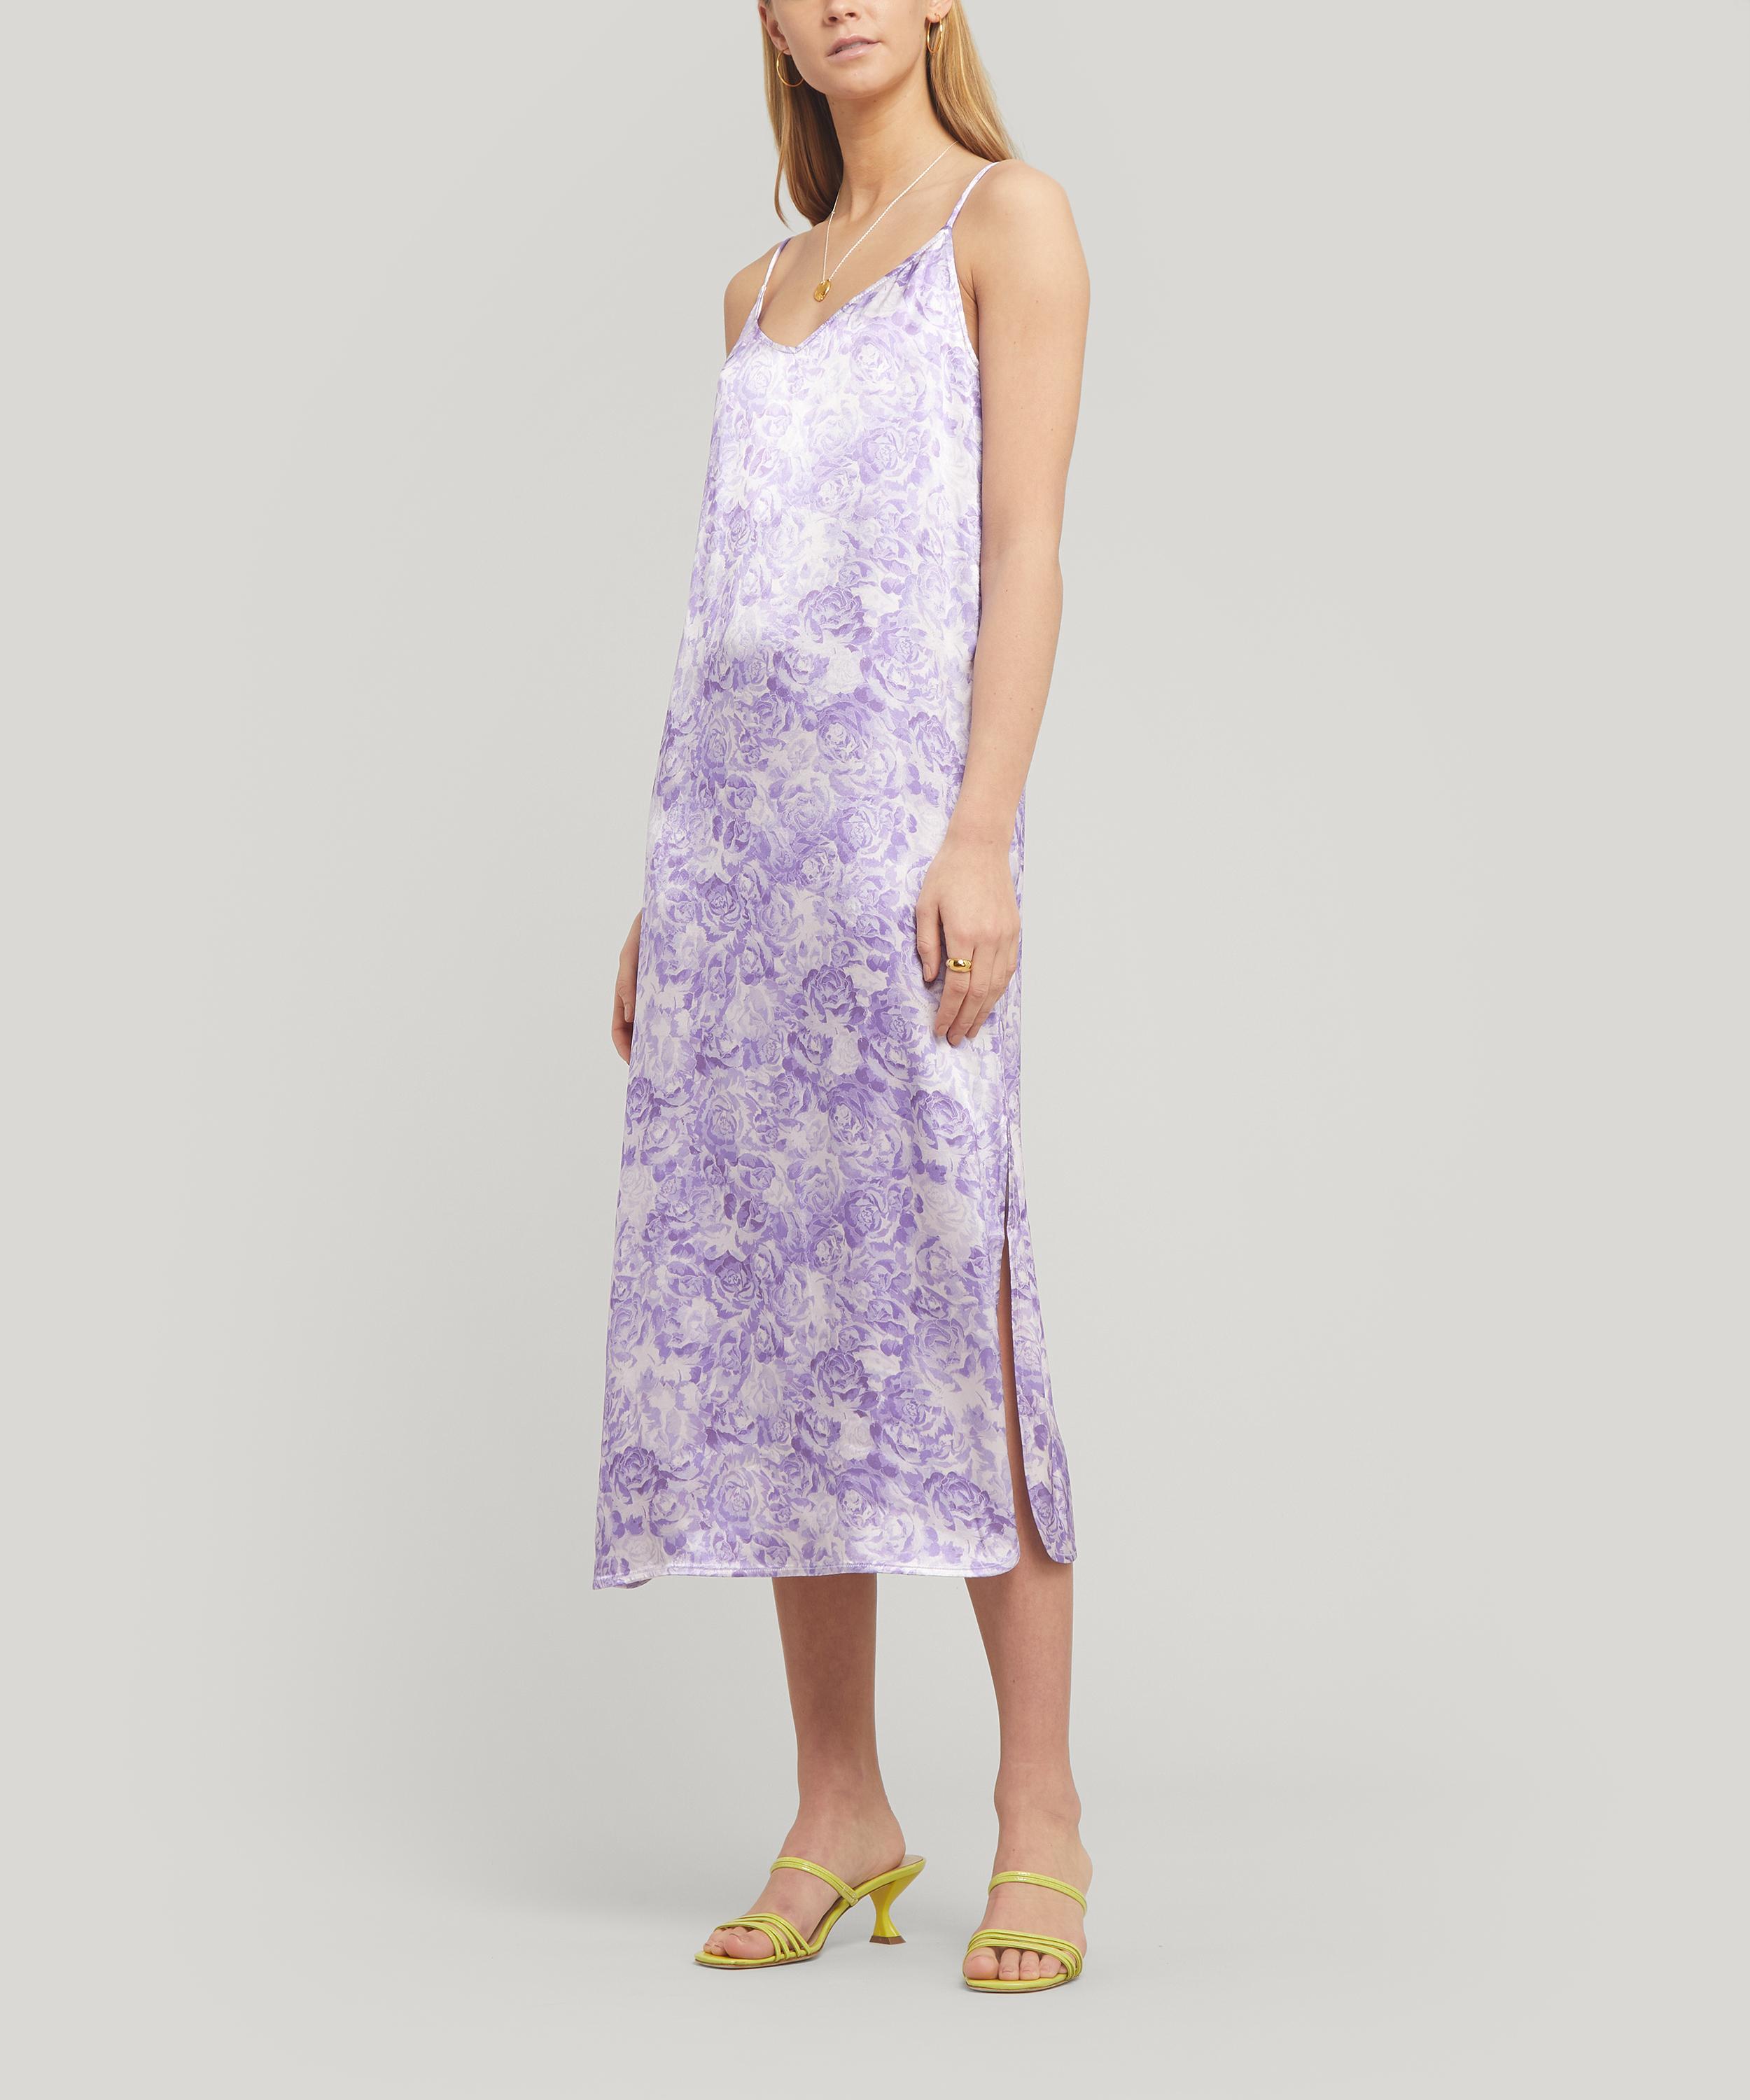 Ganni Heavy Satin Printed Slip Dress in Floral (Purple) - Lyst